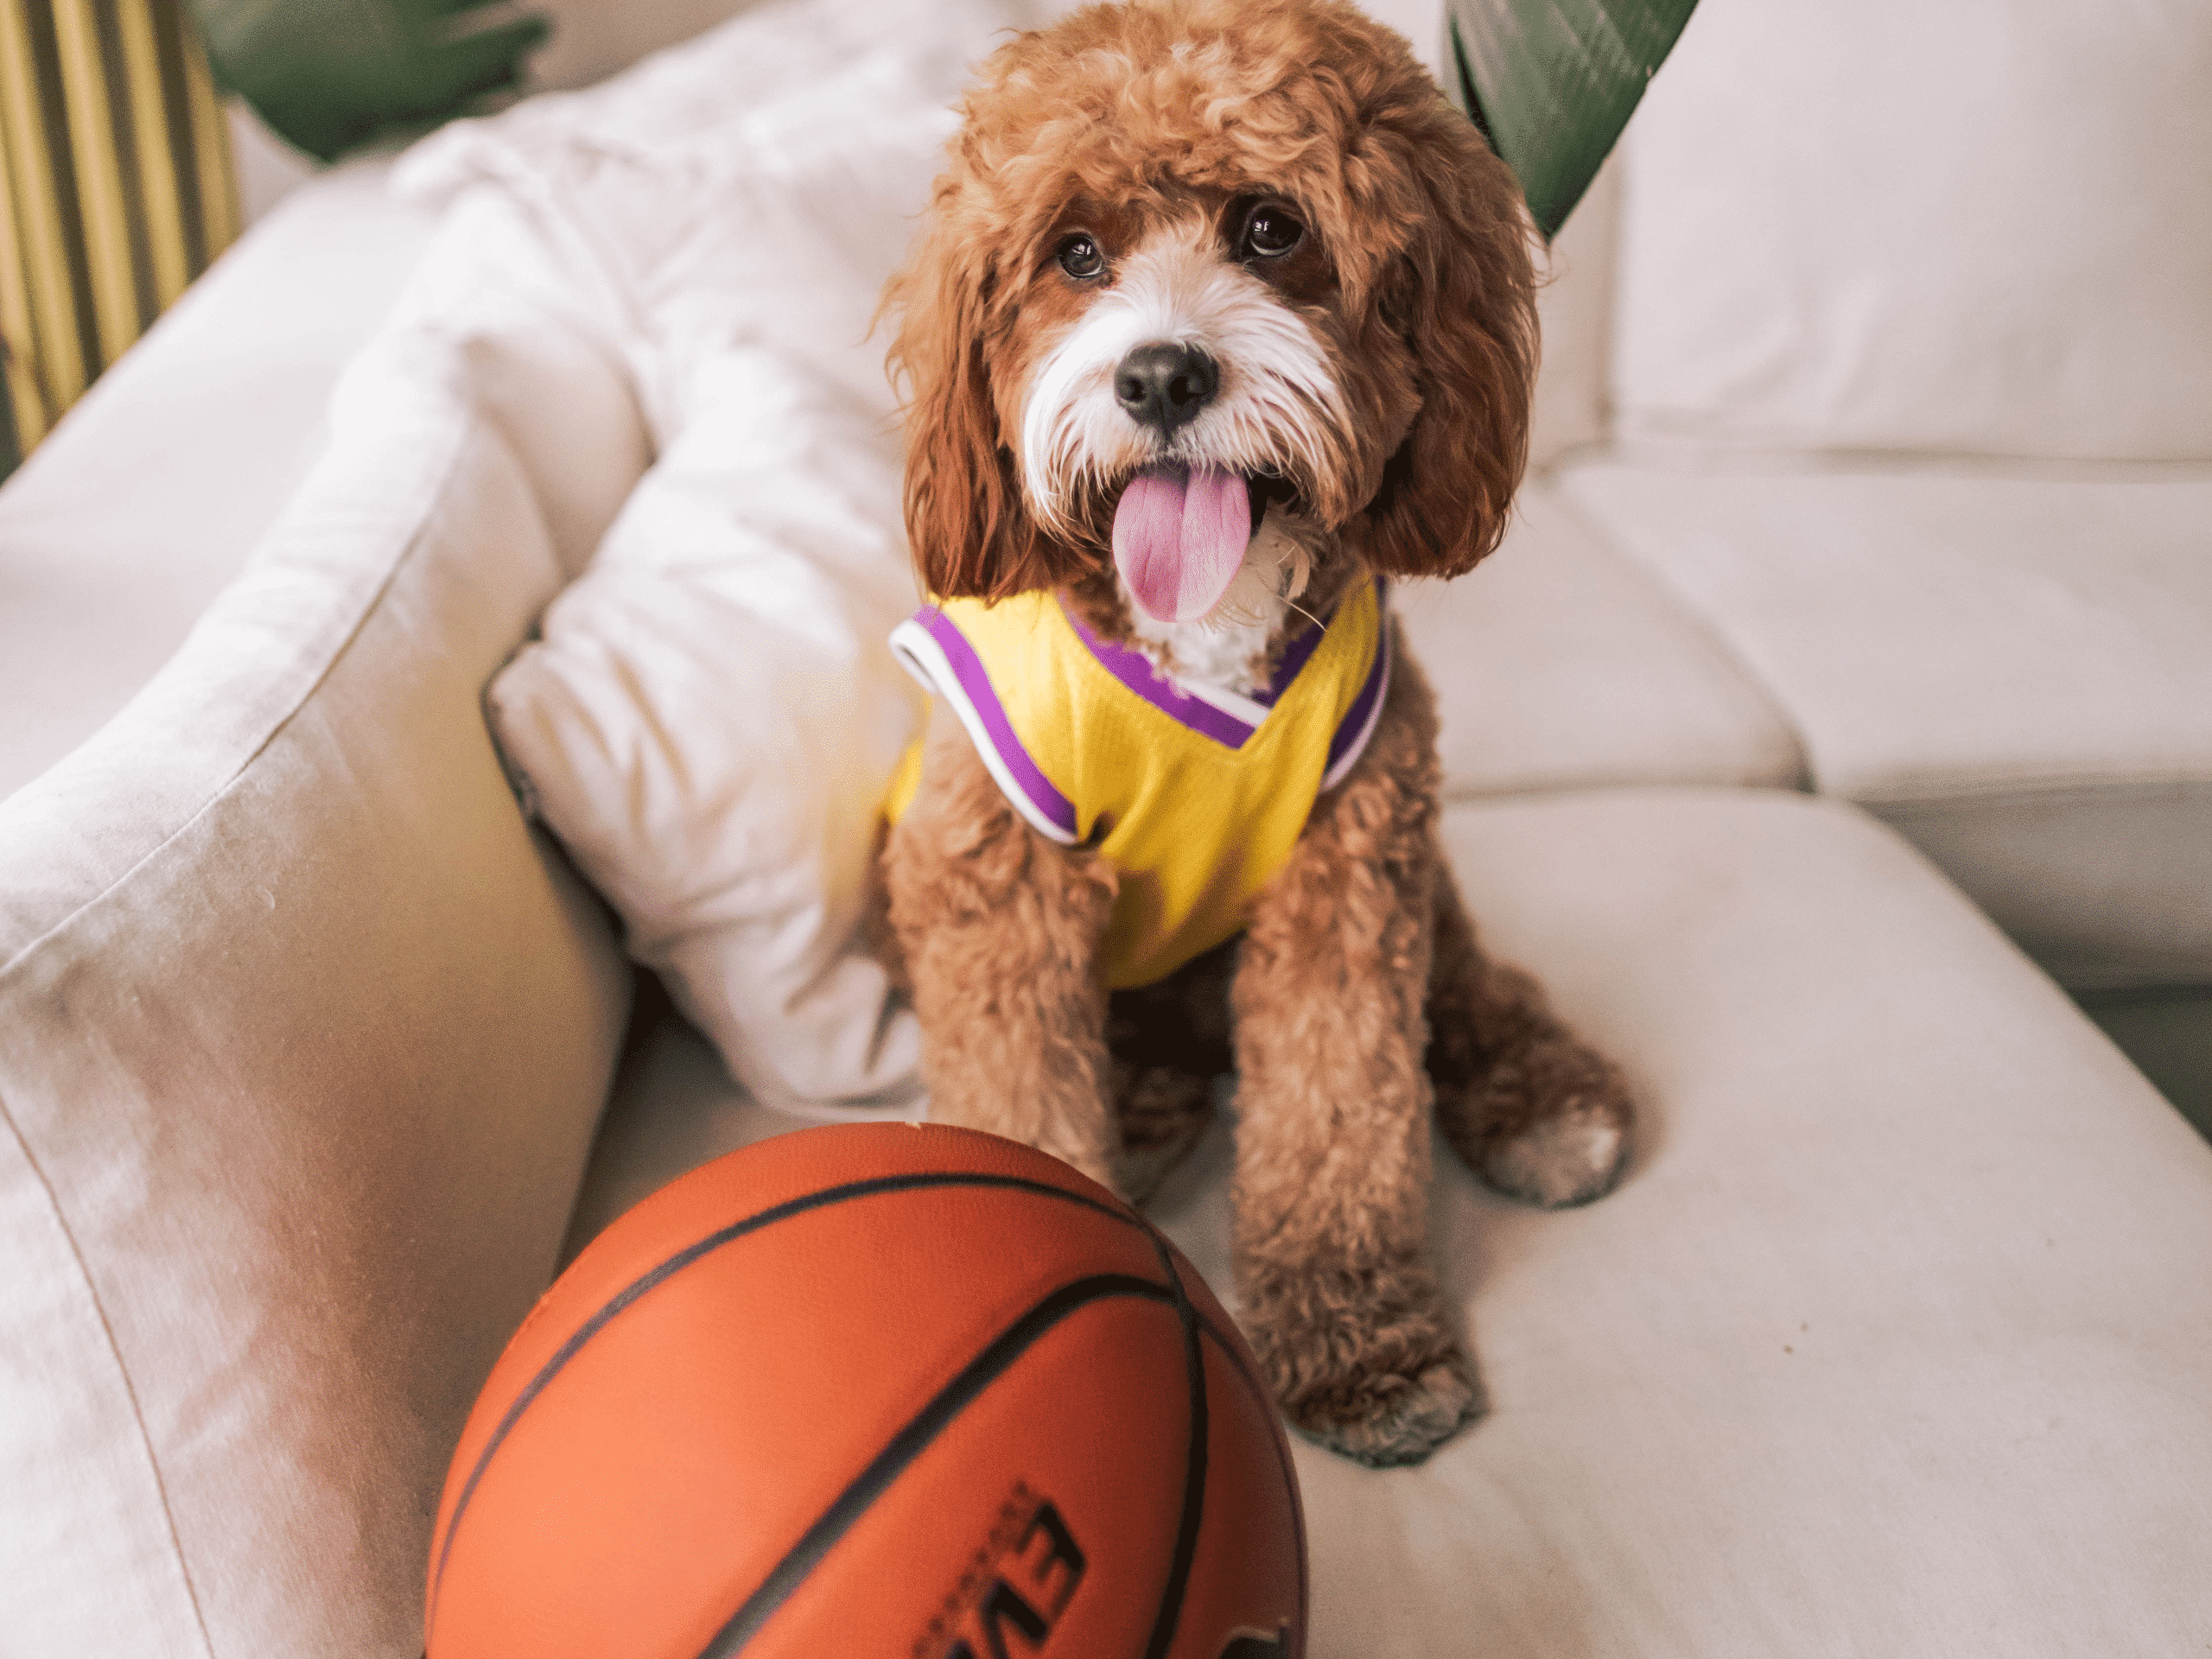 A fluffy dog wearing a basketball jersey sitting next to a basketball.